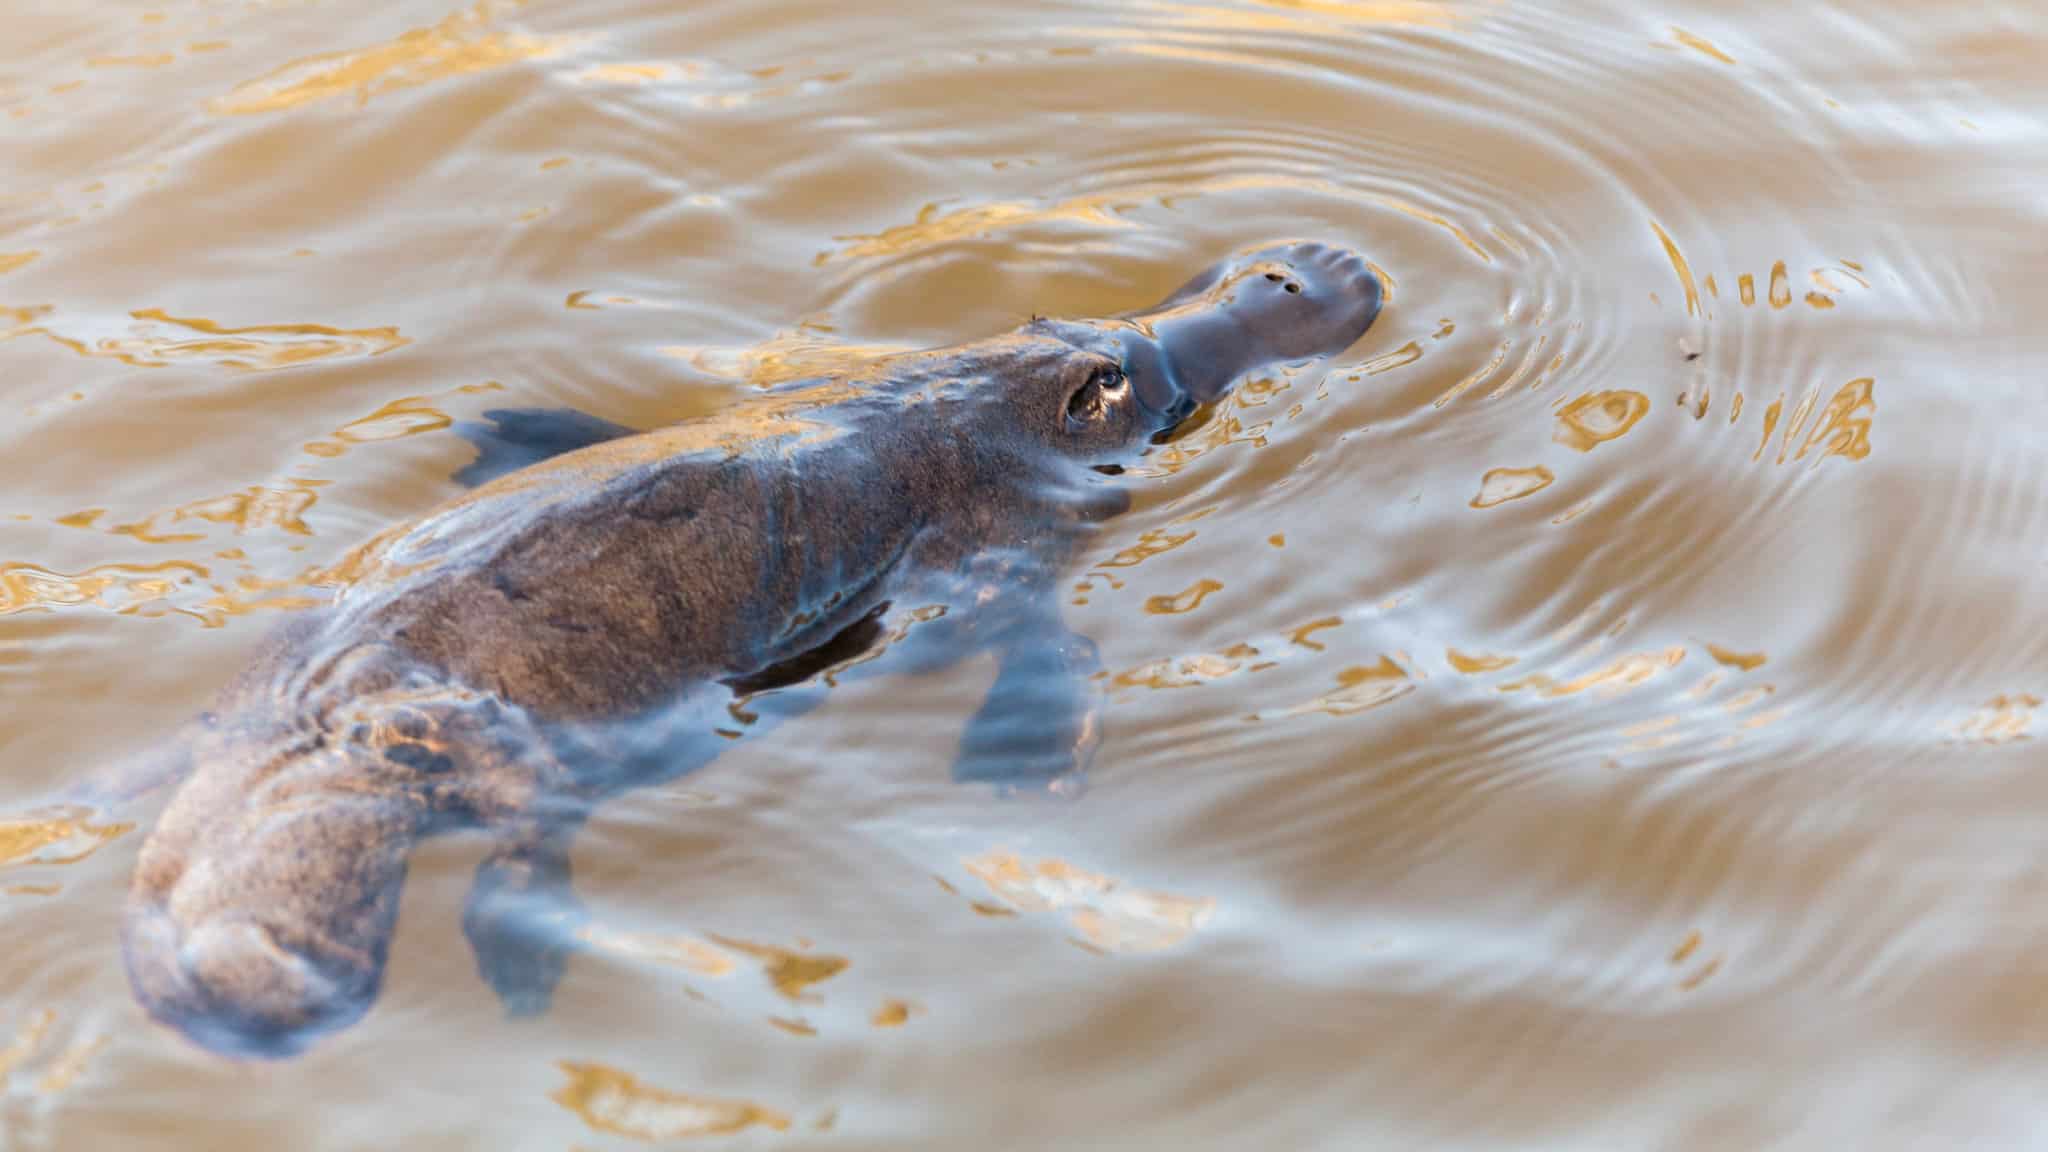 50 Platypus Facts About The World' Strangest Mammals